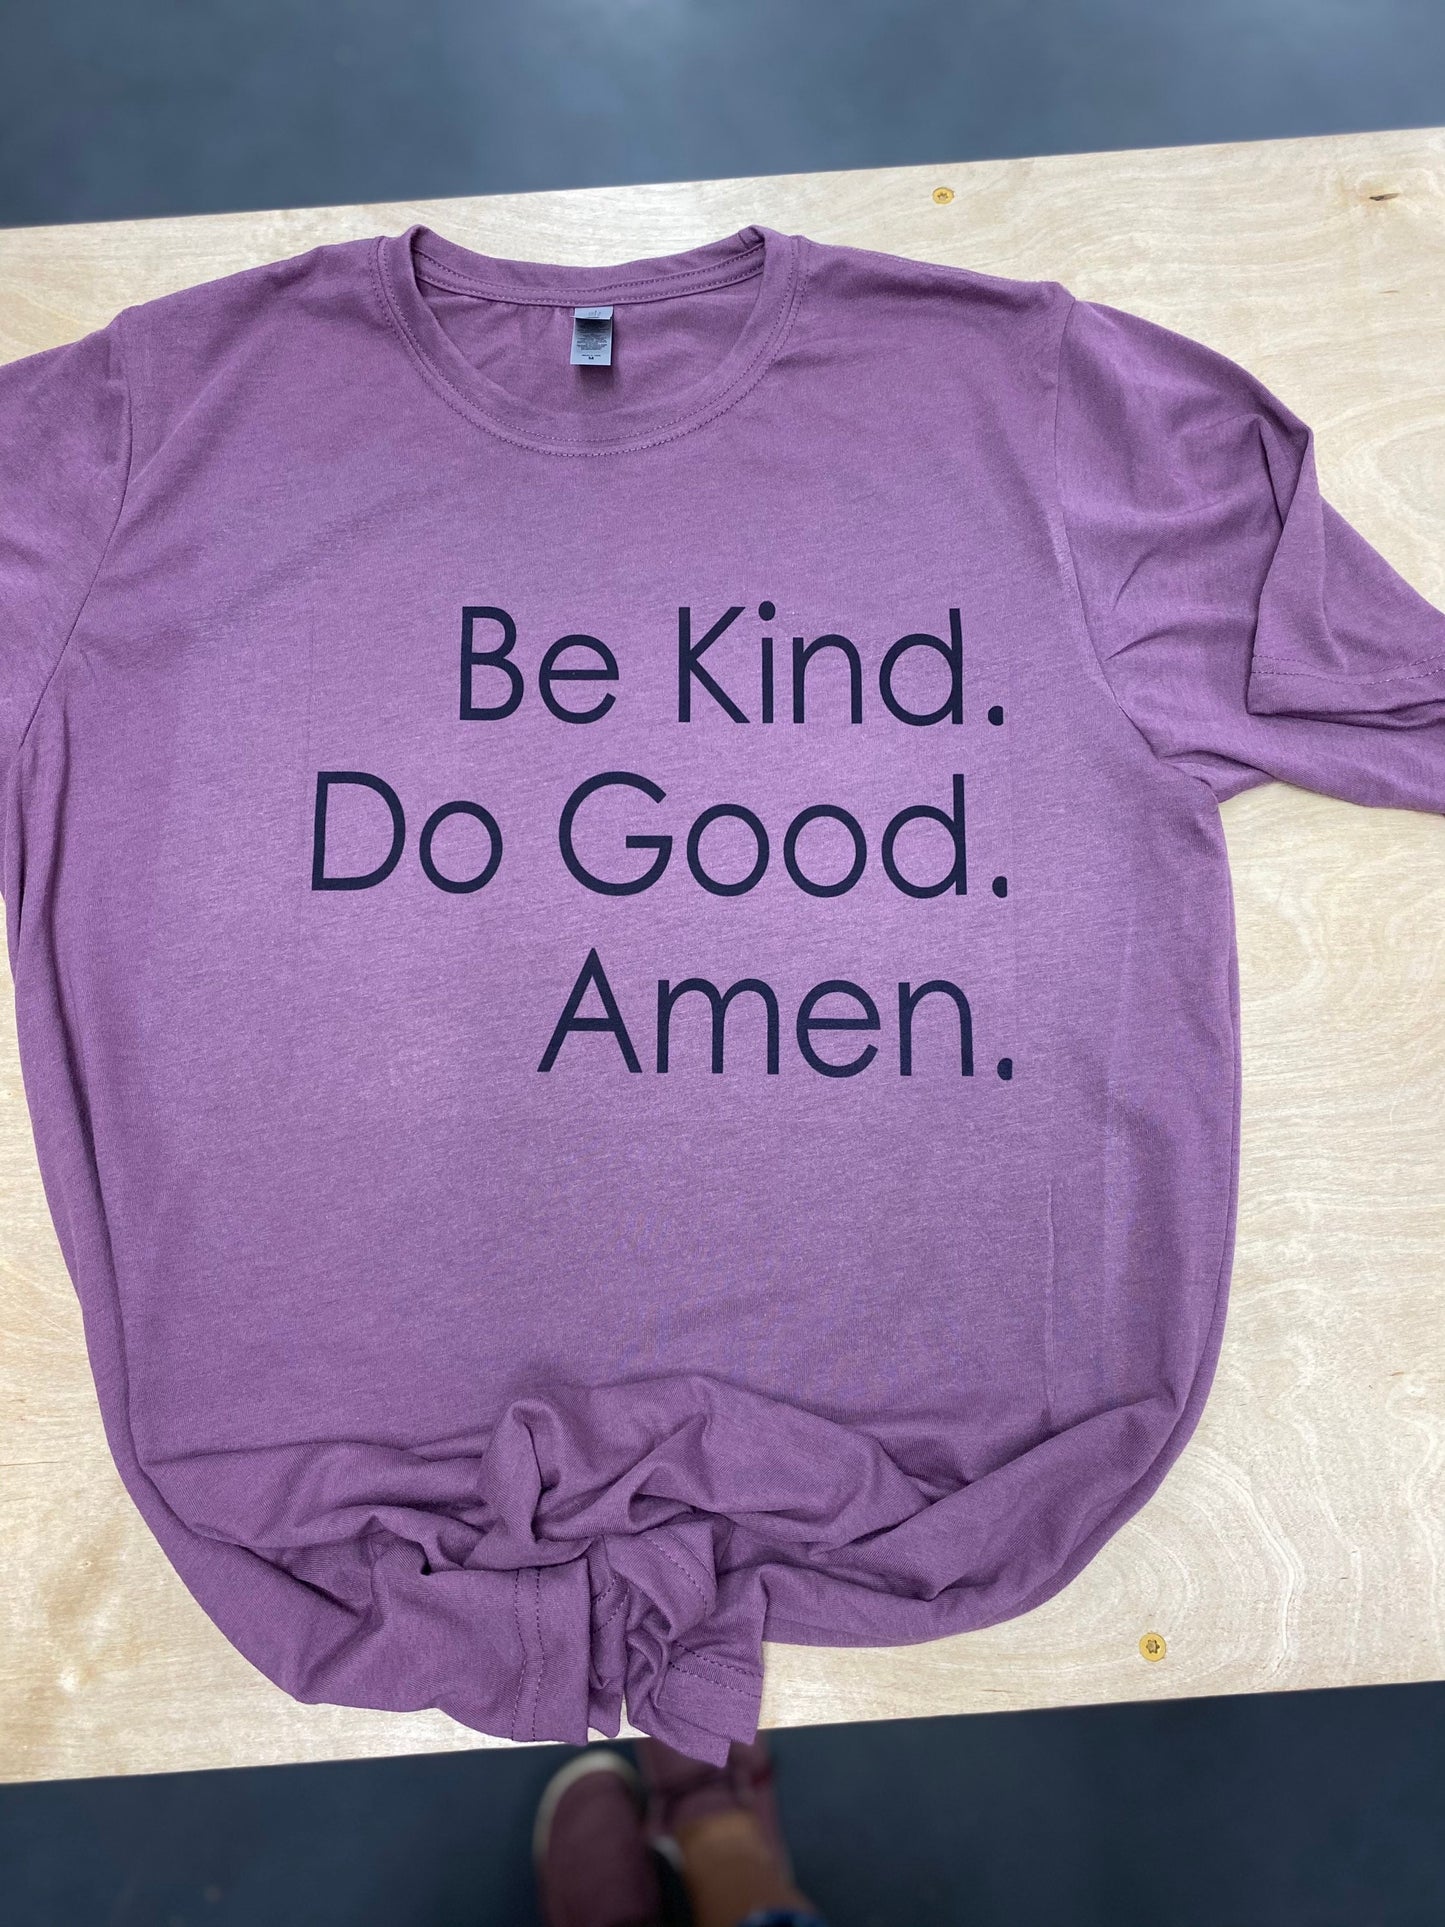 Be kind. Do good. Amen.